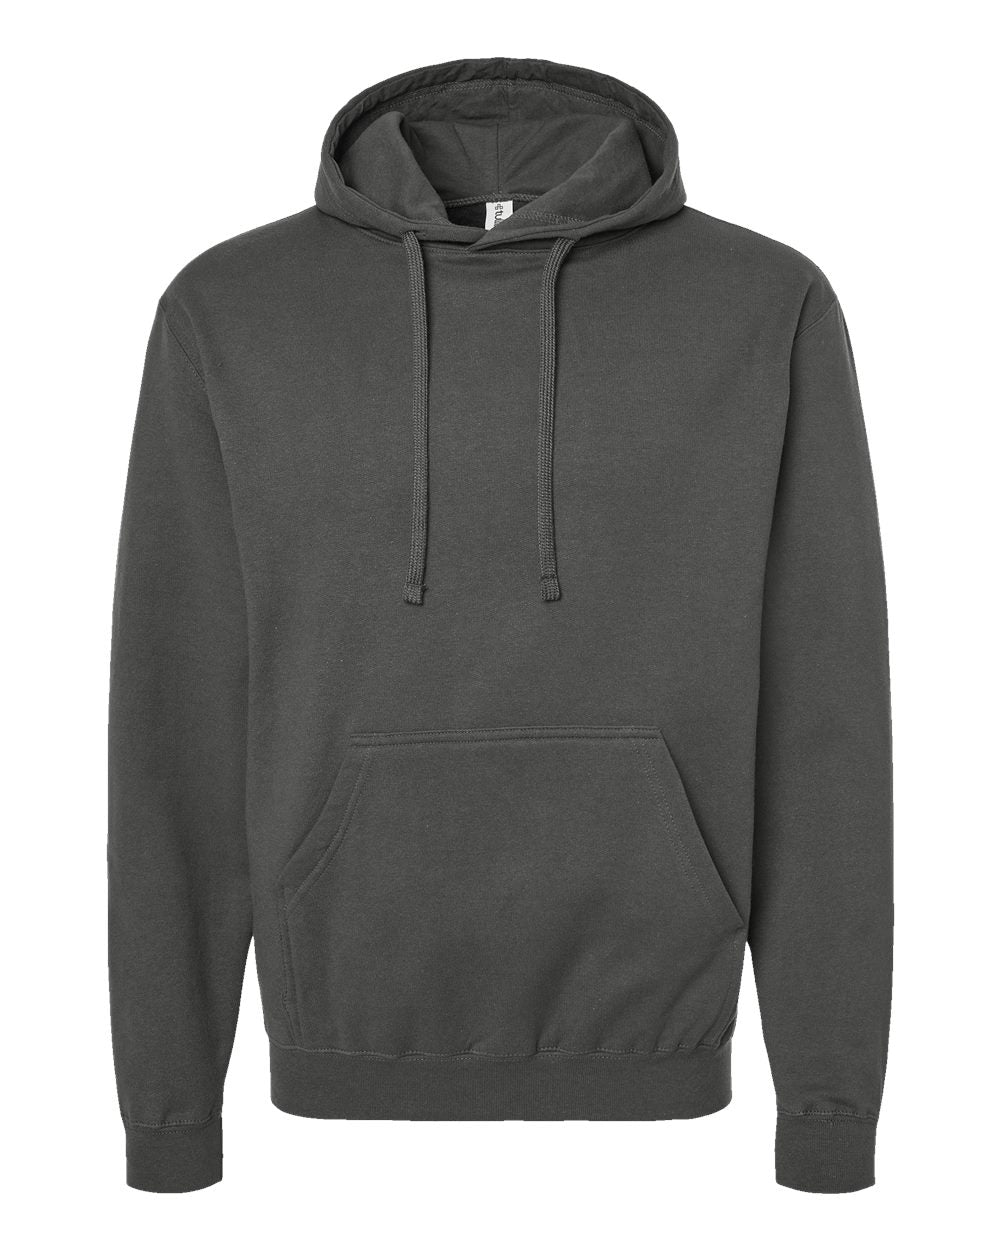 Pretreated Tultex 320 Unisex Fleece Hooded Sweatshirt – CheaterTee